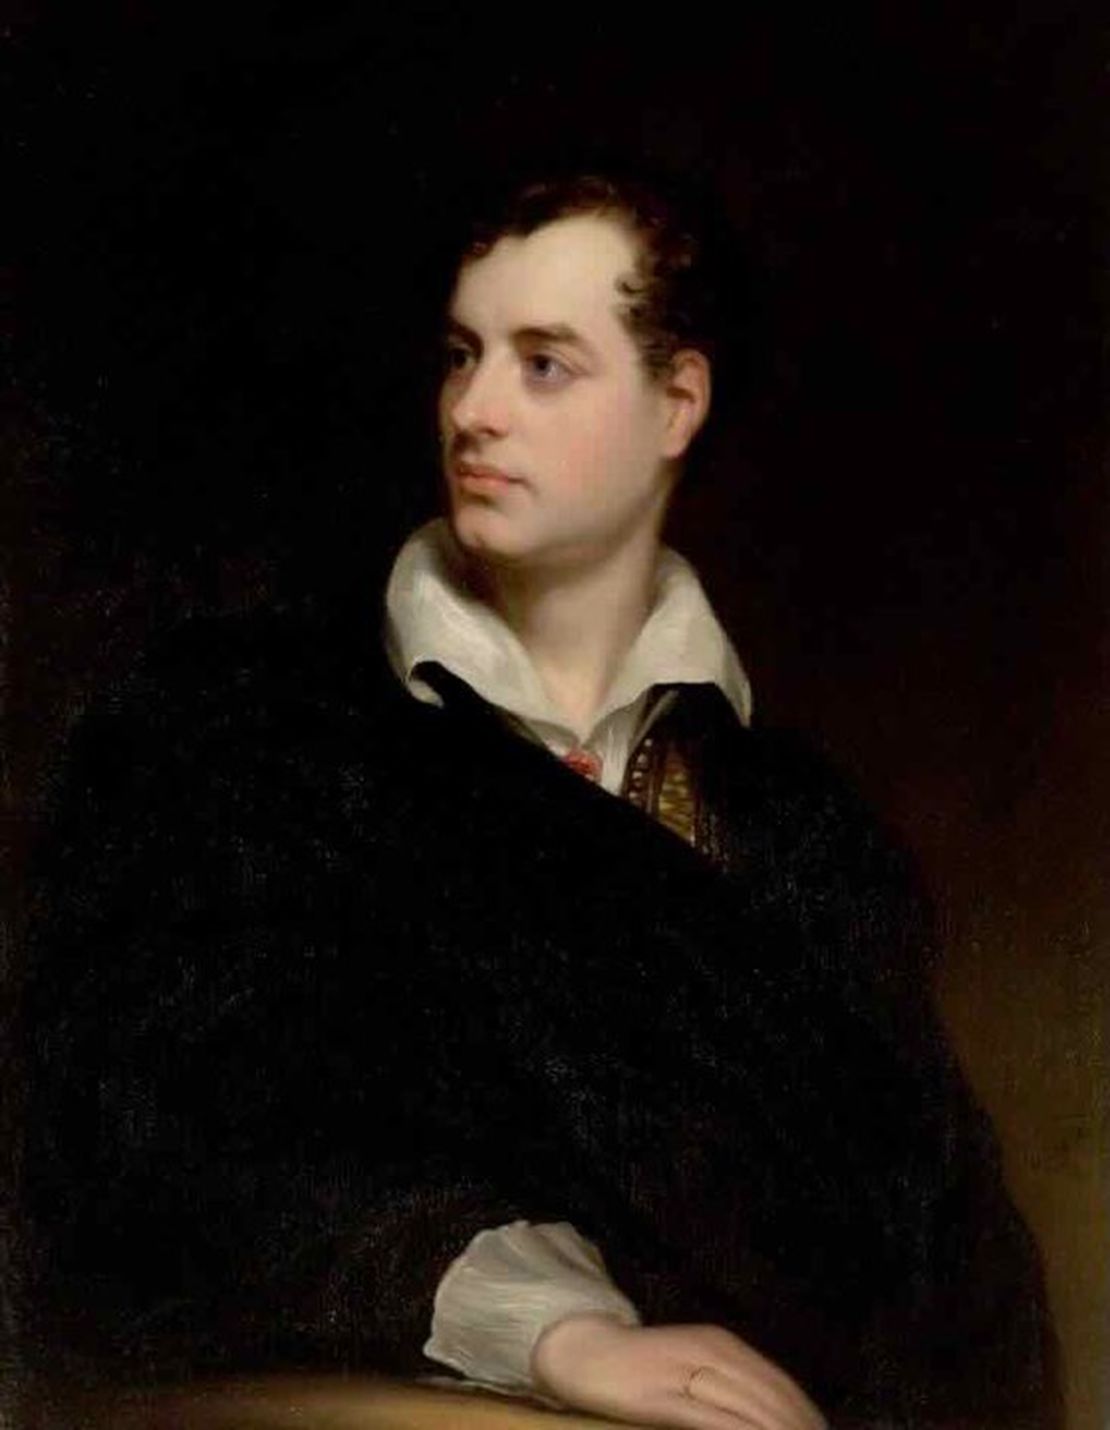 Scottish Author George Gordon (Byron) was born